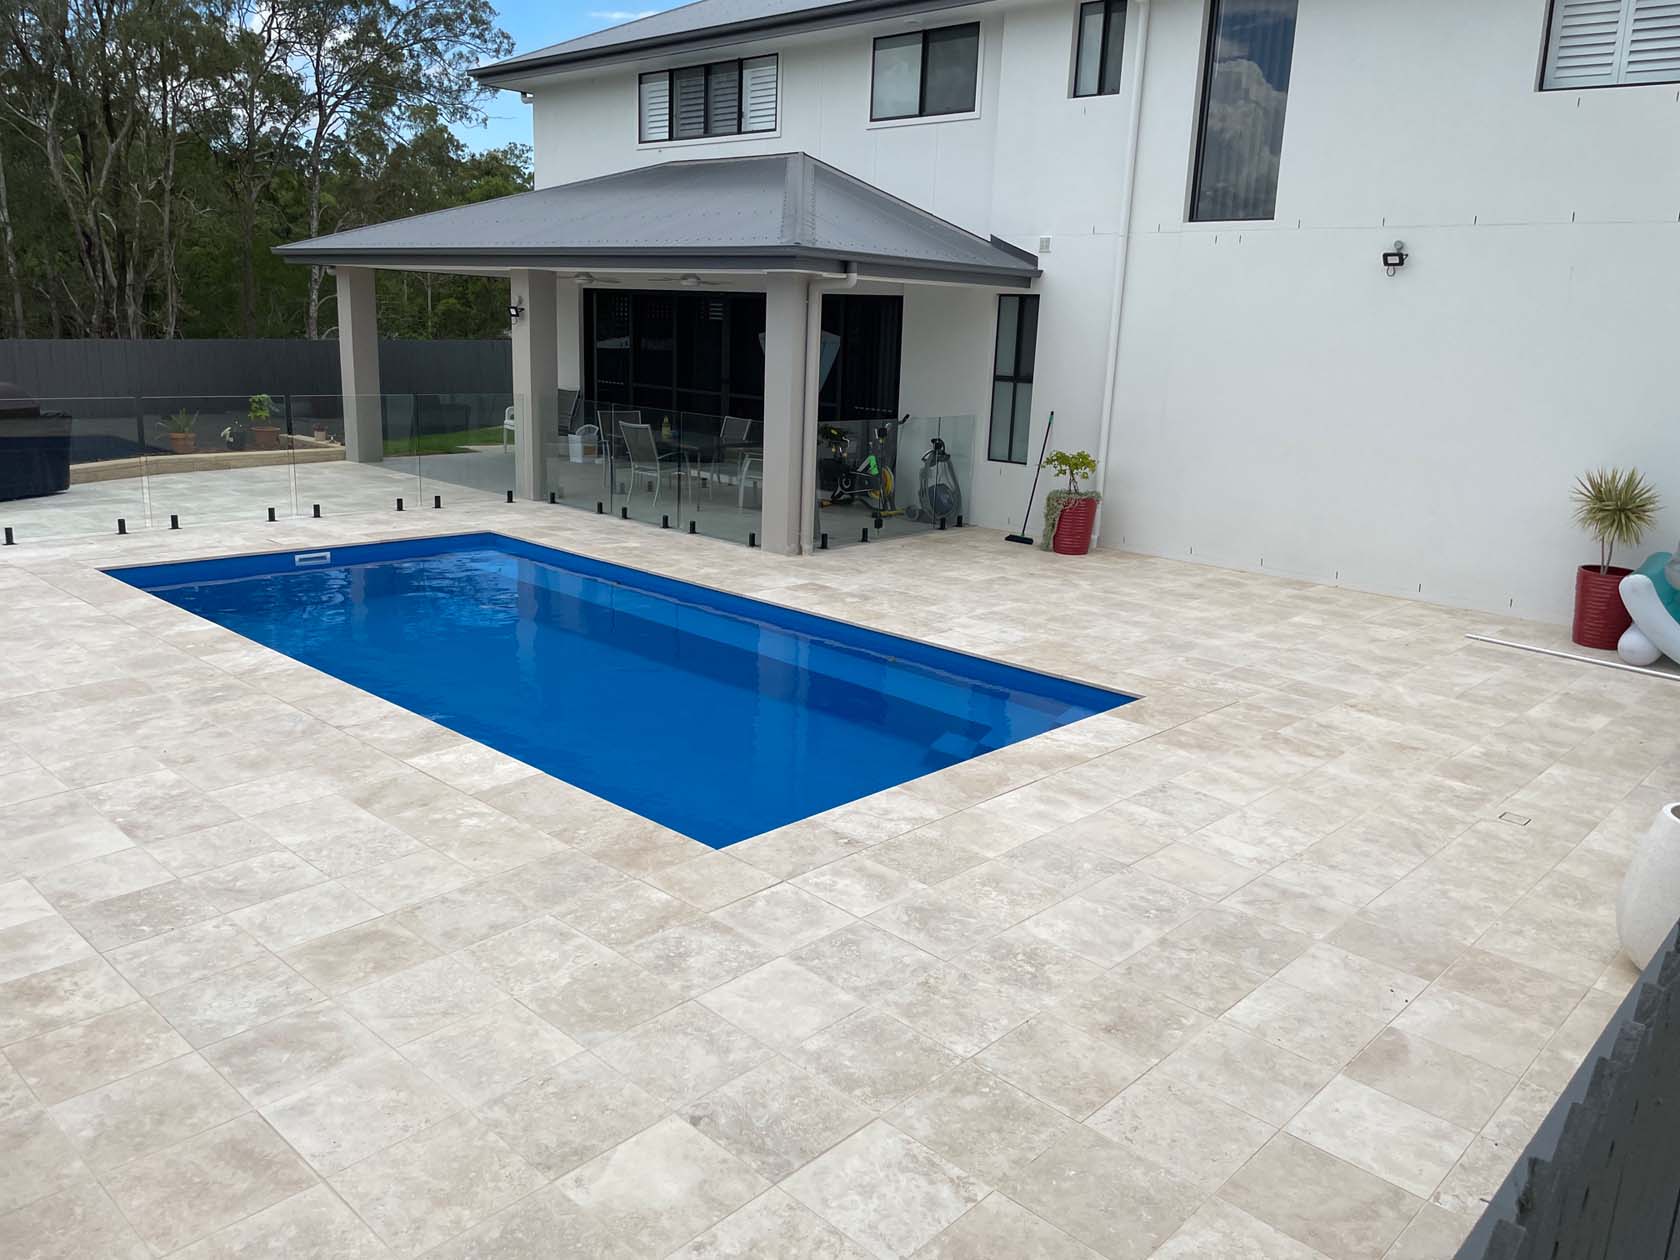 Macadamia Travertine pool coping and surround tiles